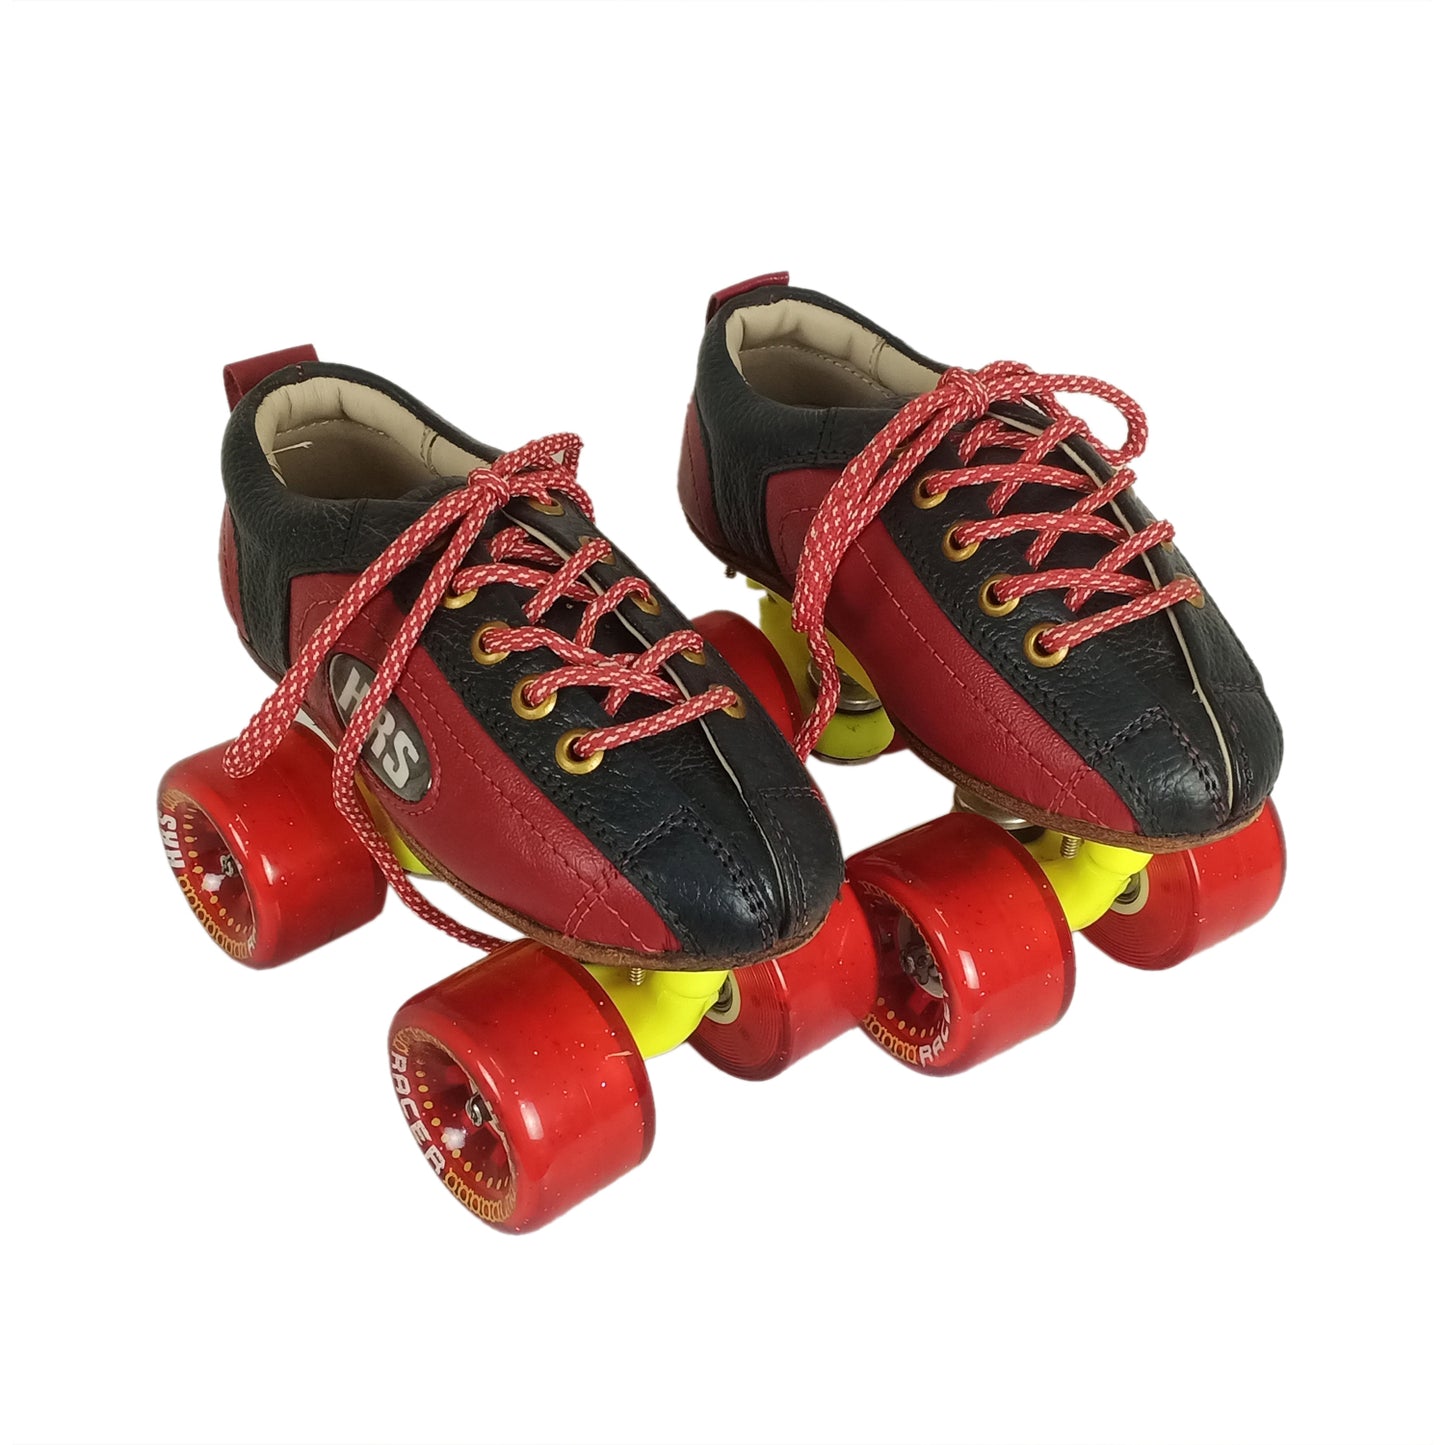 HRS SK-203 Racer Shoe Skates with Free Bag, Red - Best Price online Prokicksports.com